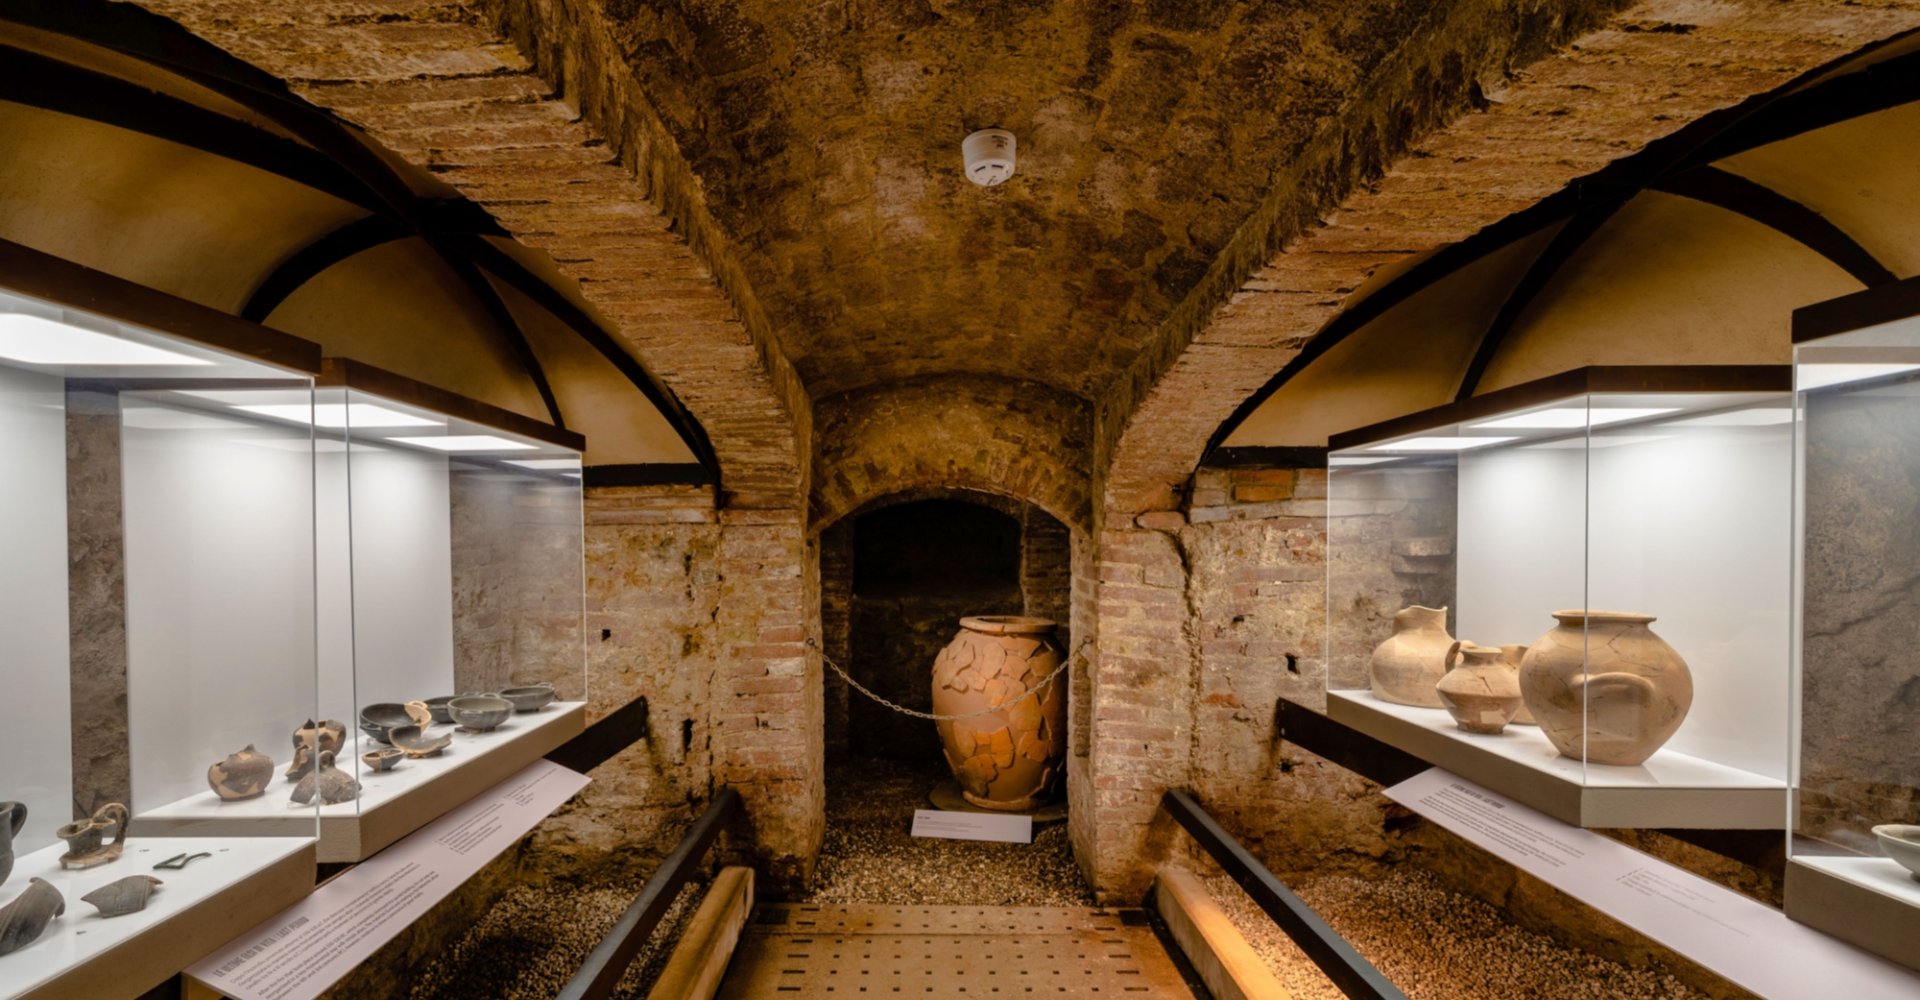 The Archaeological Museum in Peccioli